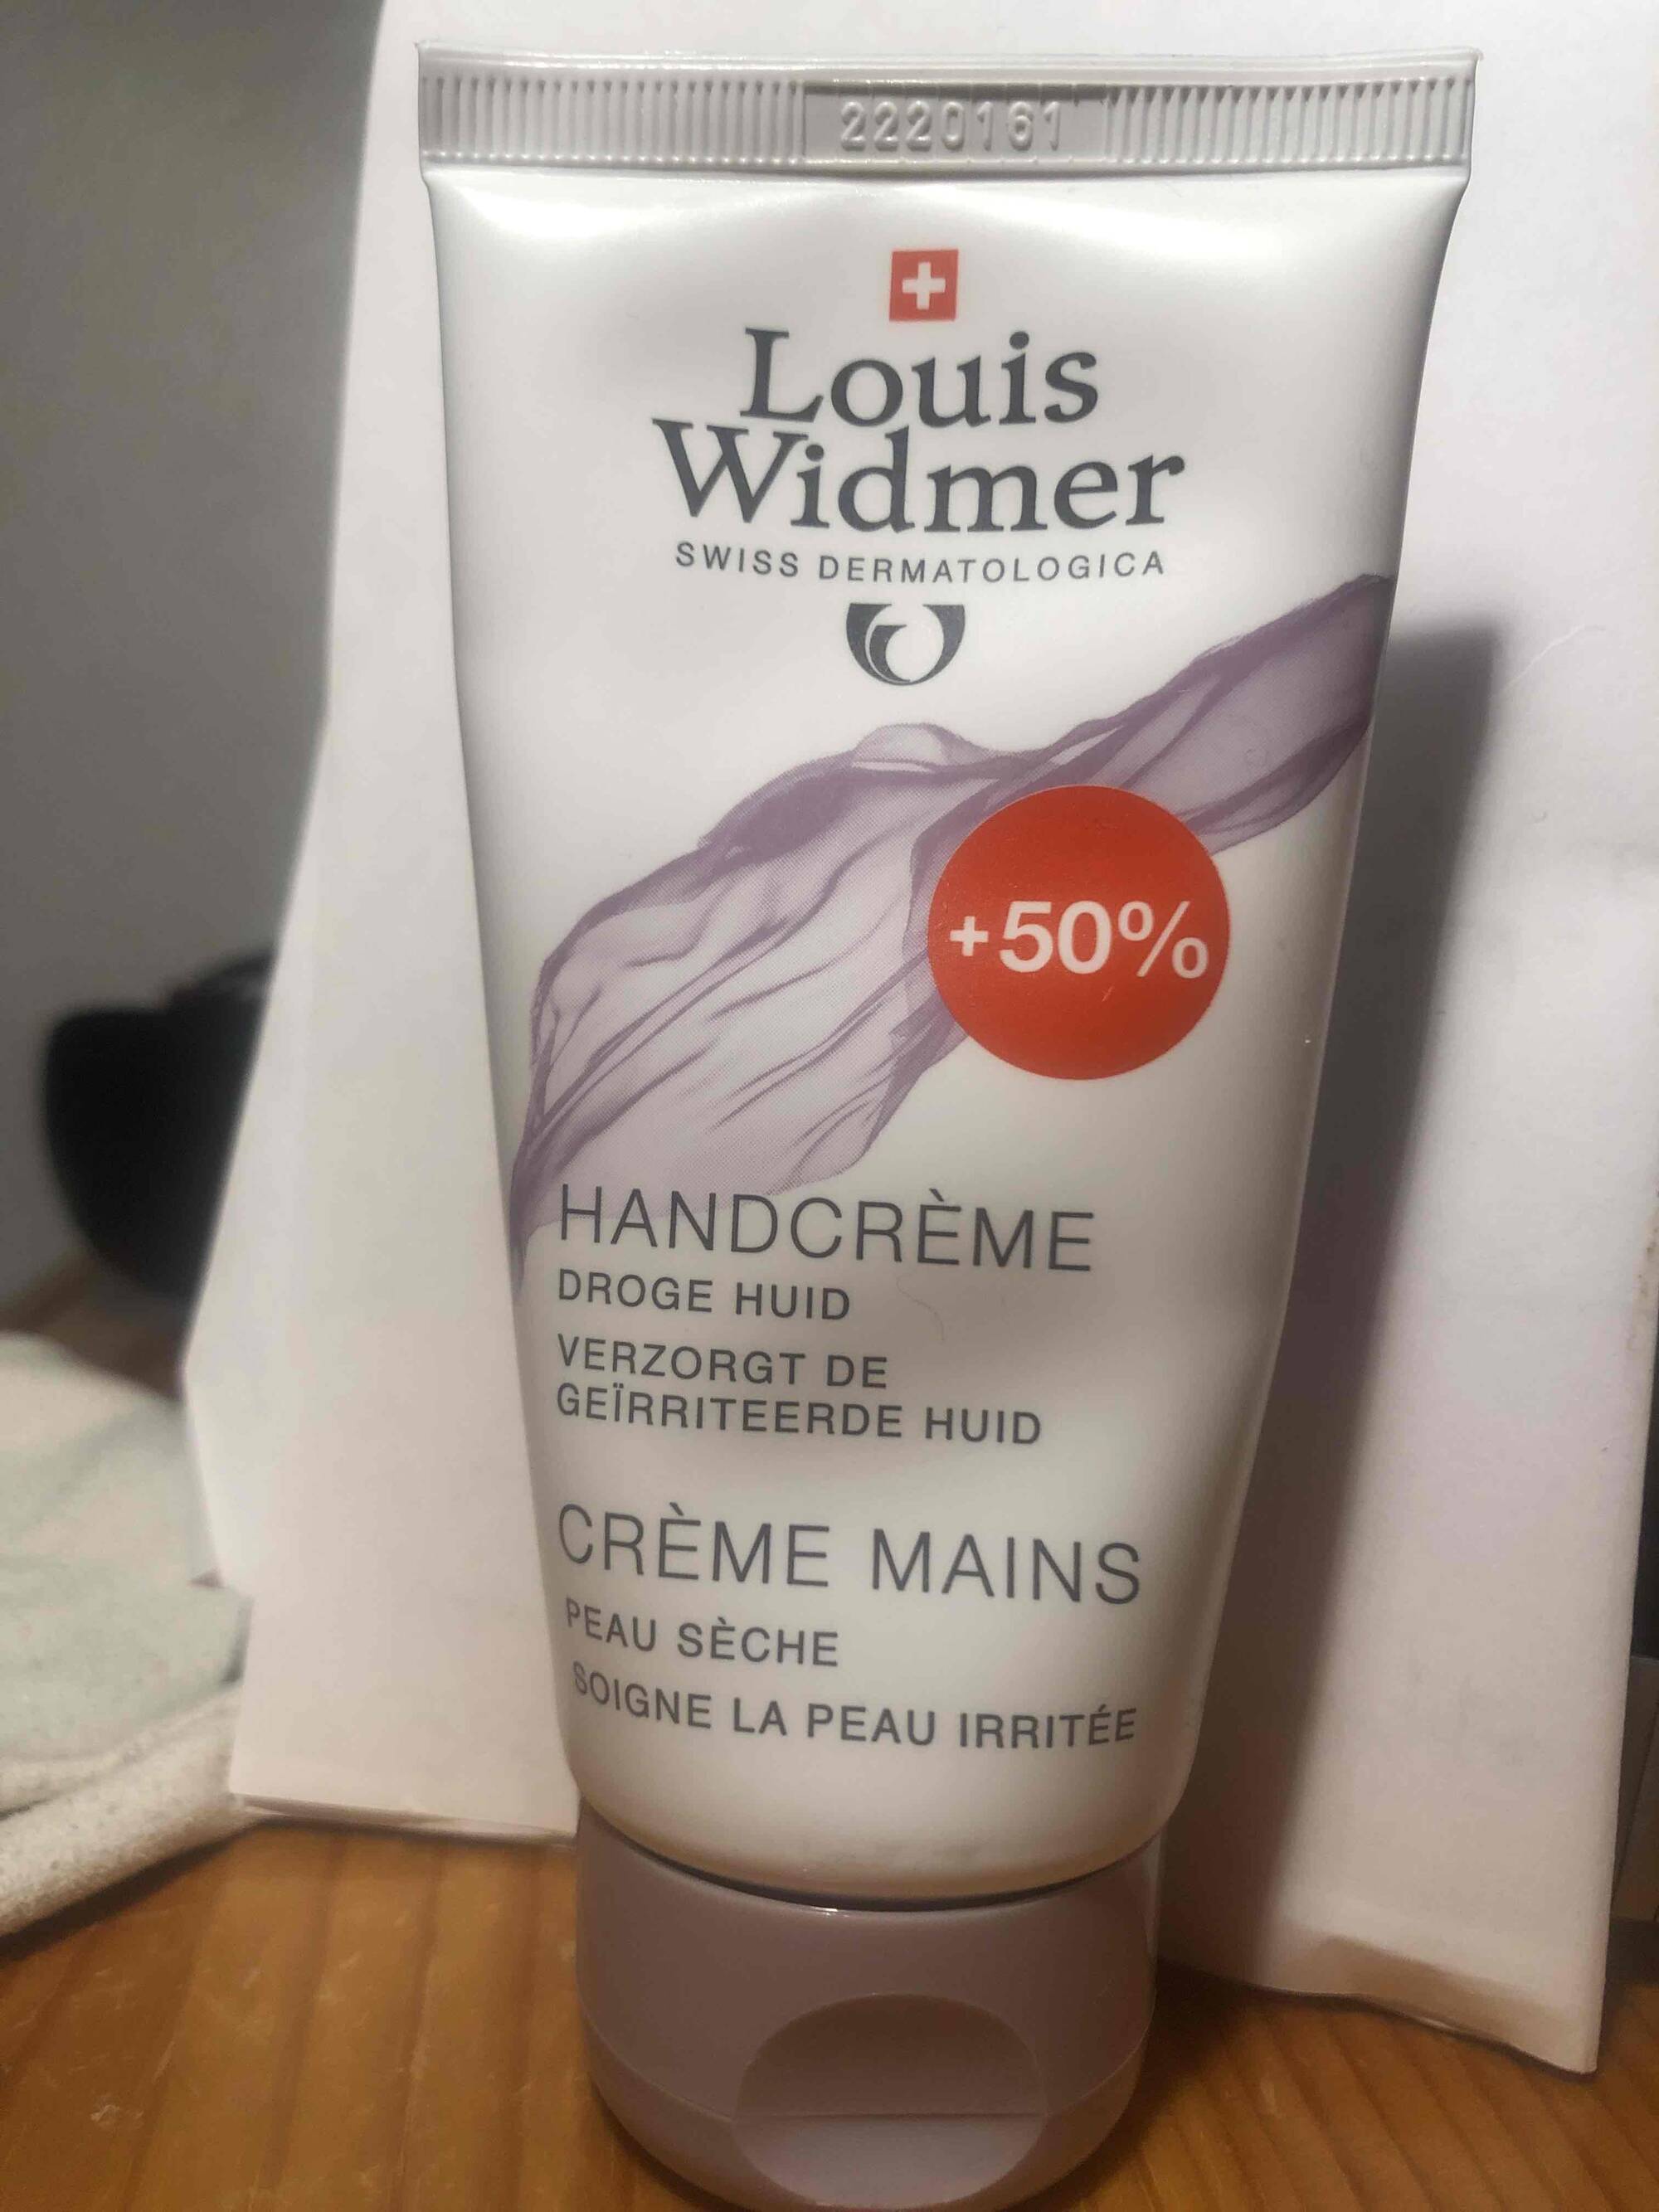 LOUIS WIDMER - Crème mains peau sèche